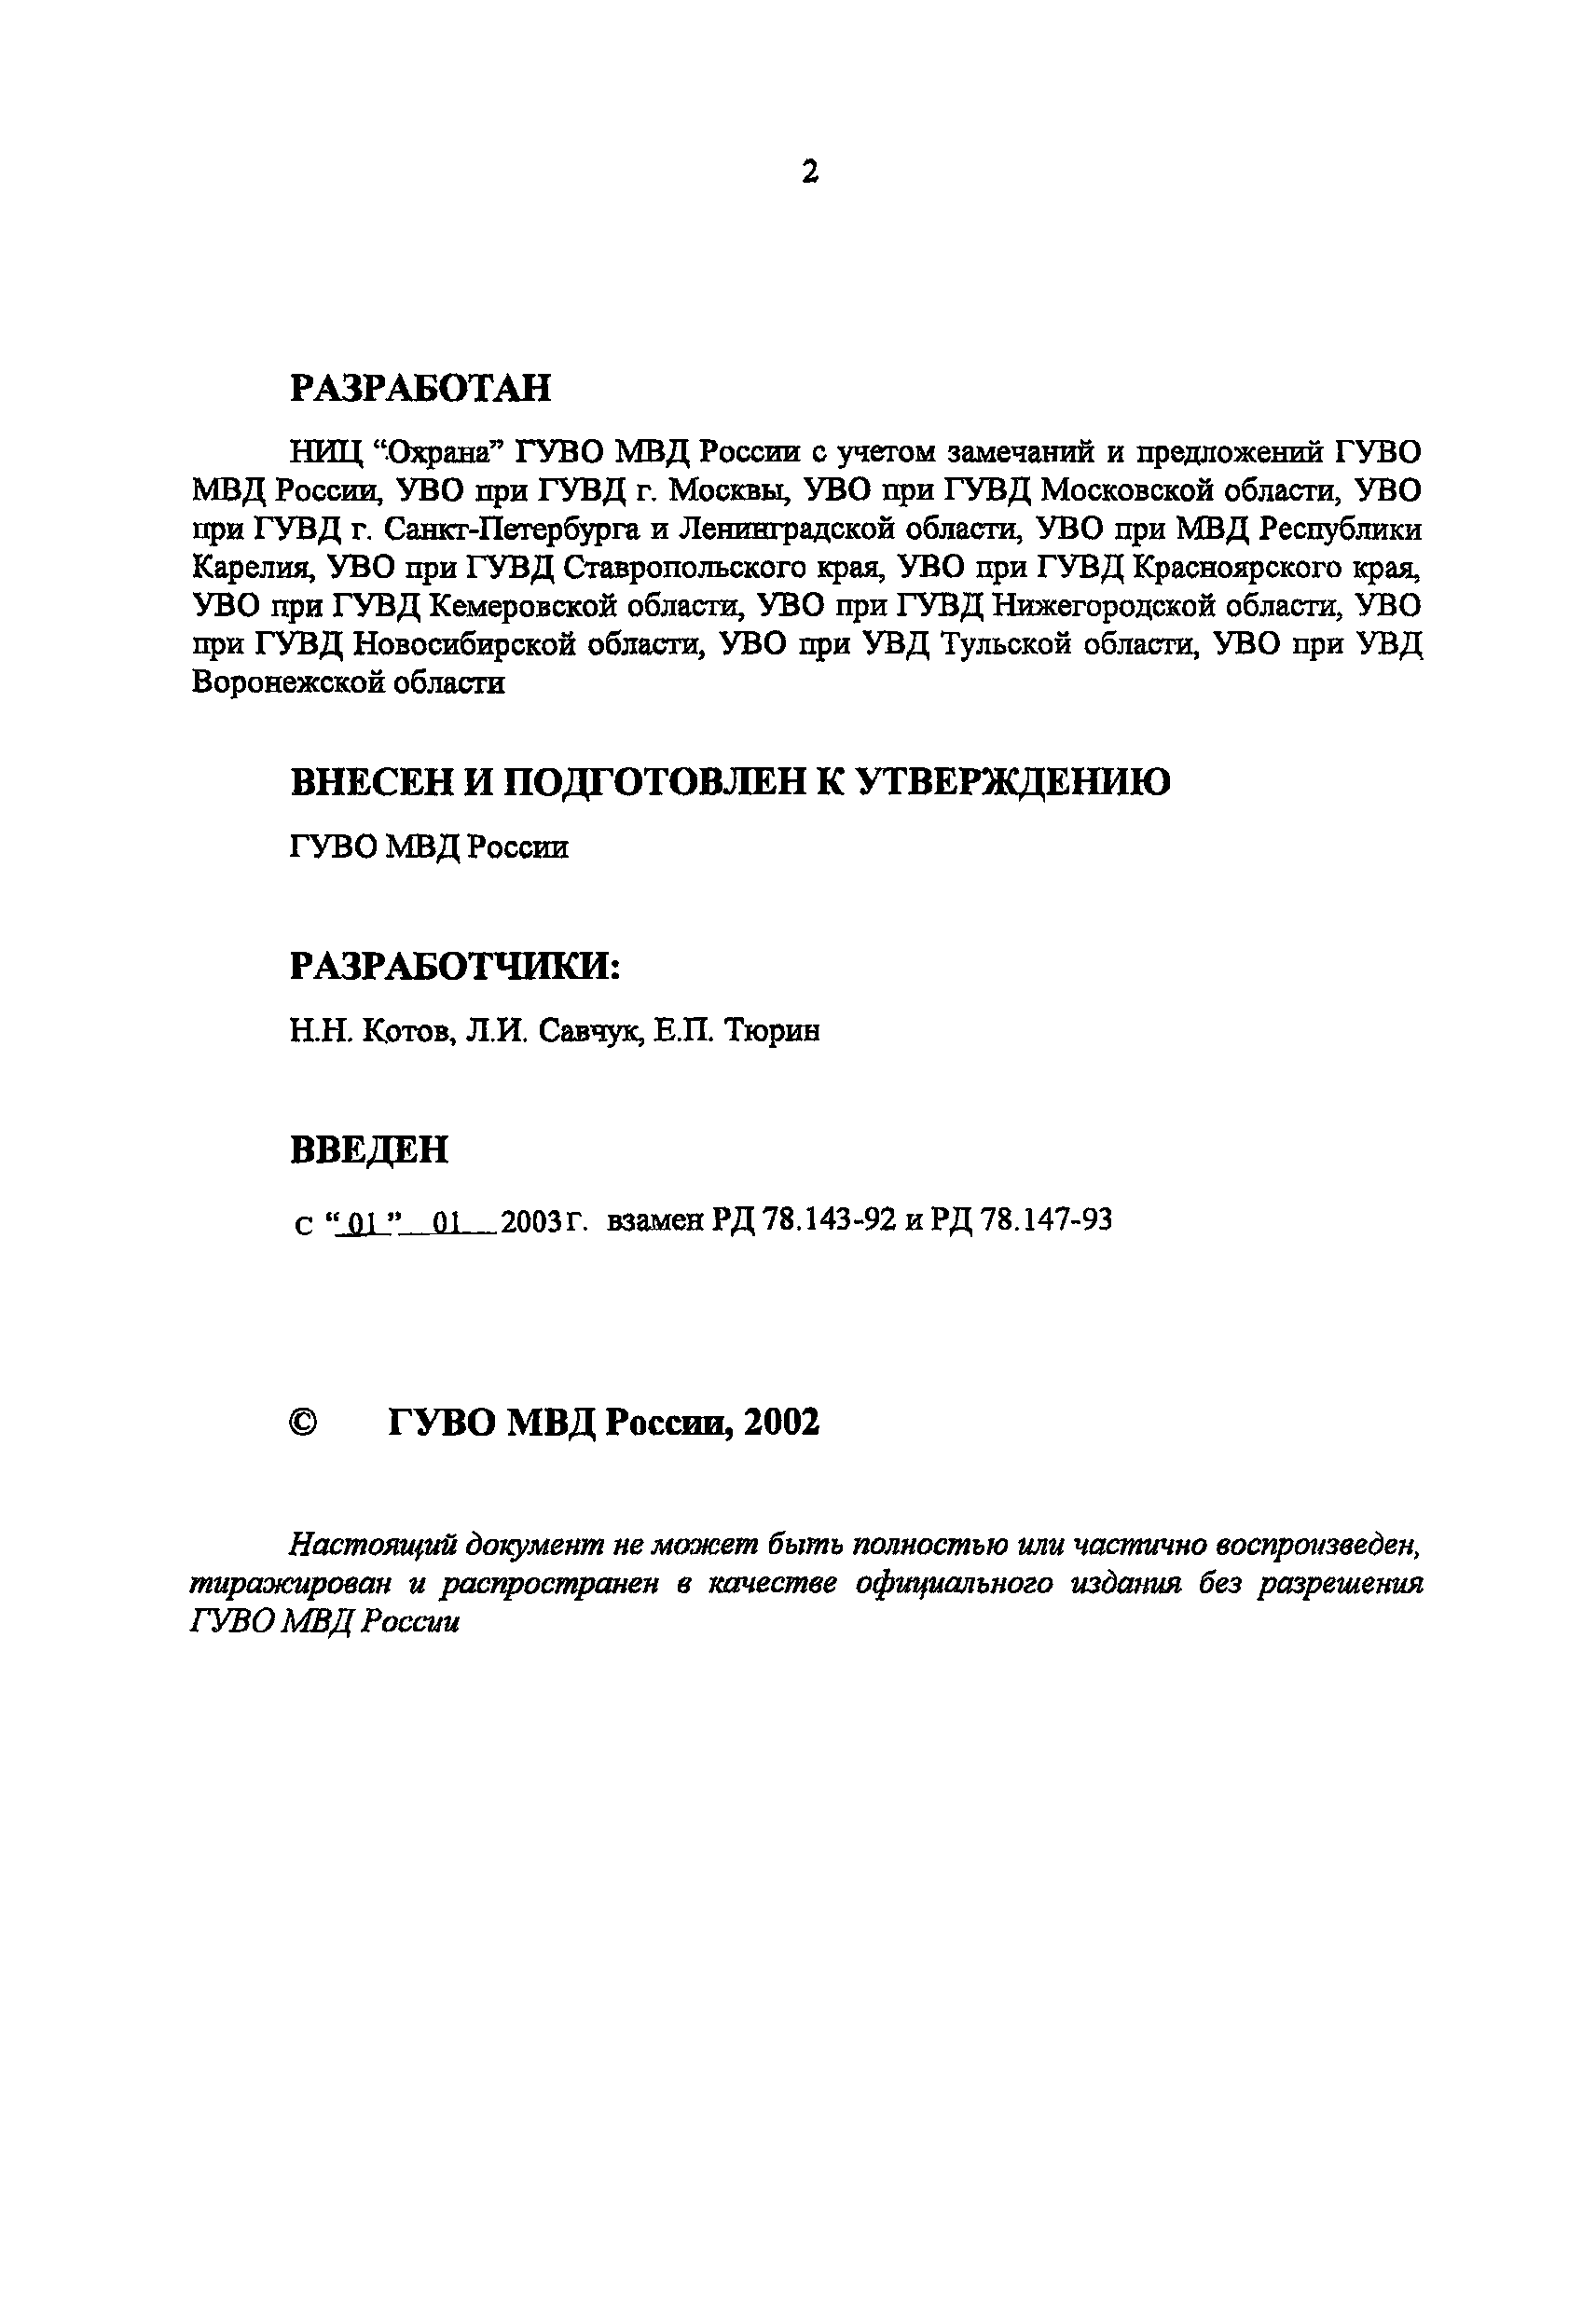 РД 78.36.003-2002/МВД России